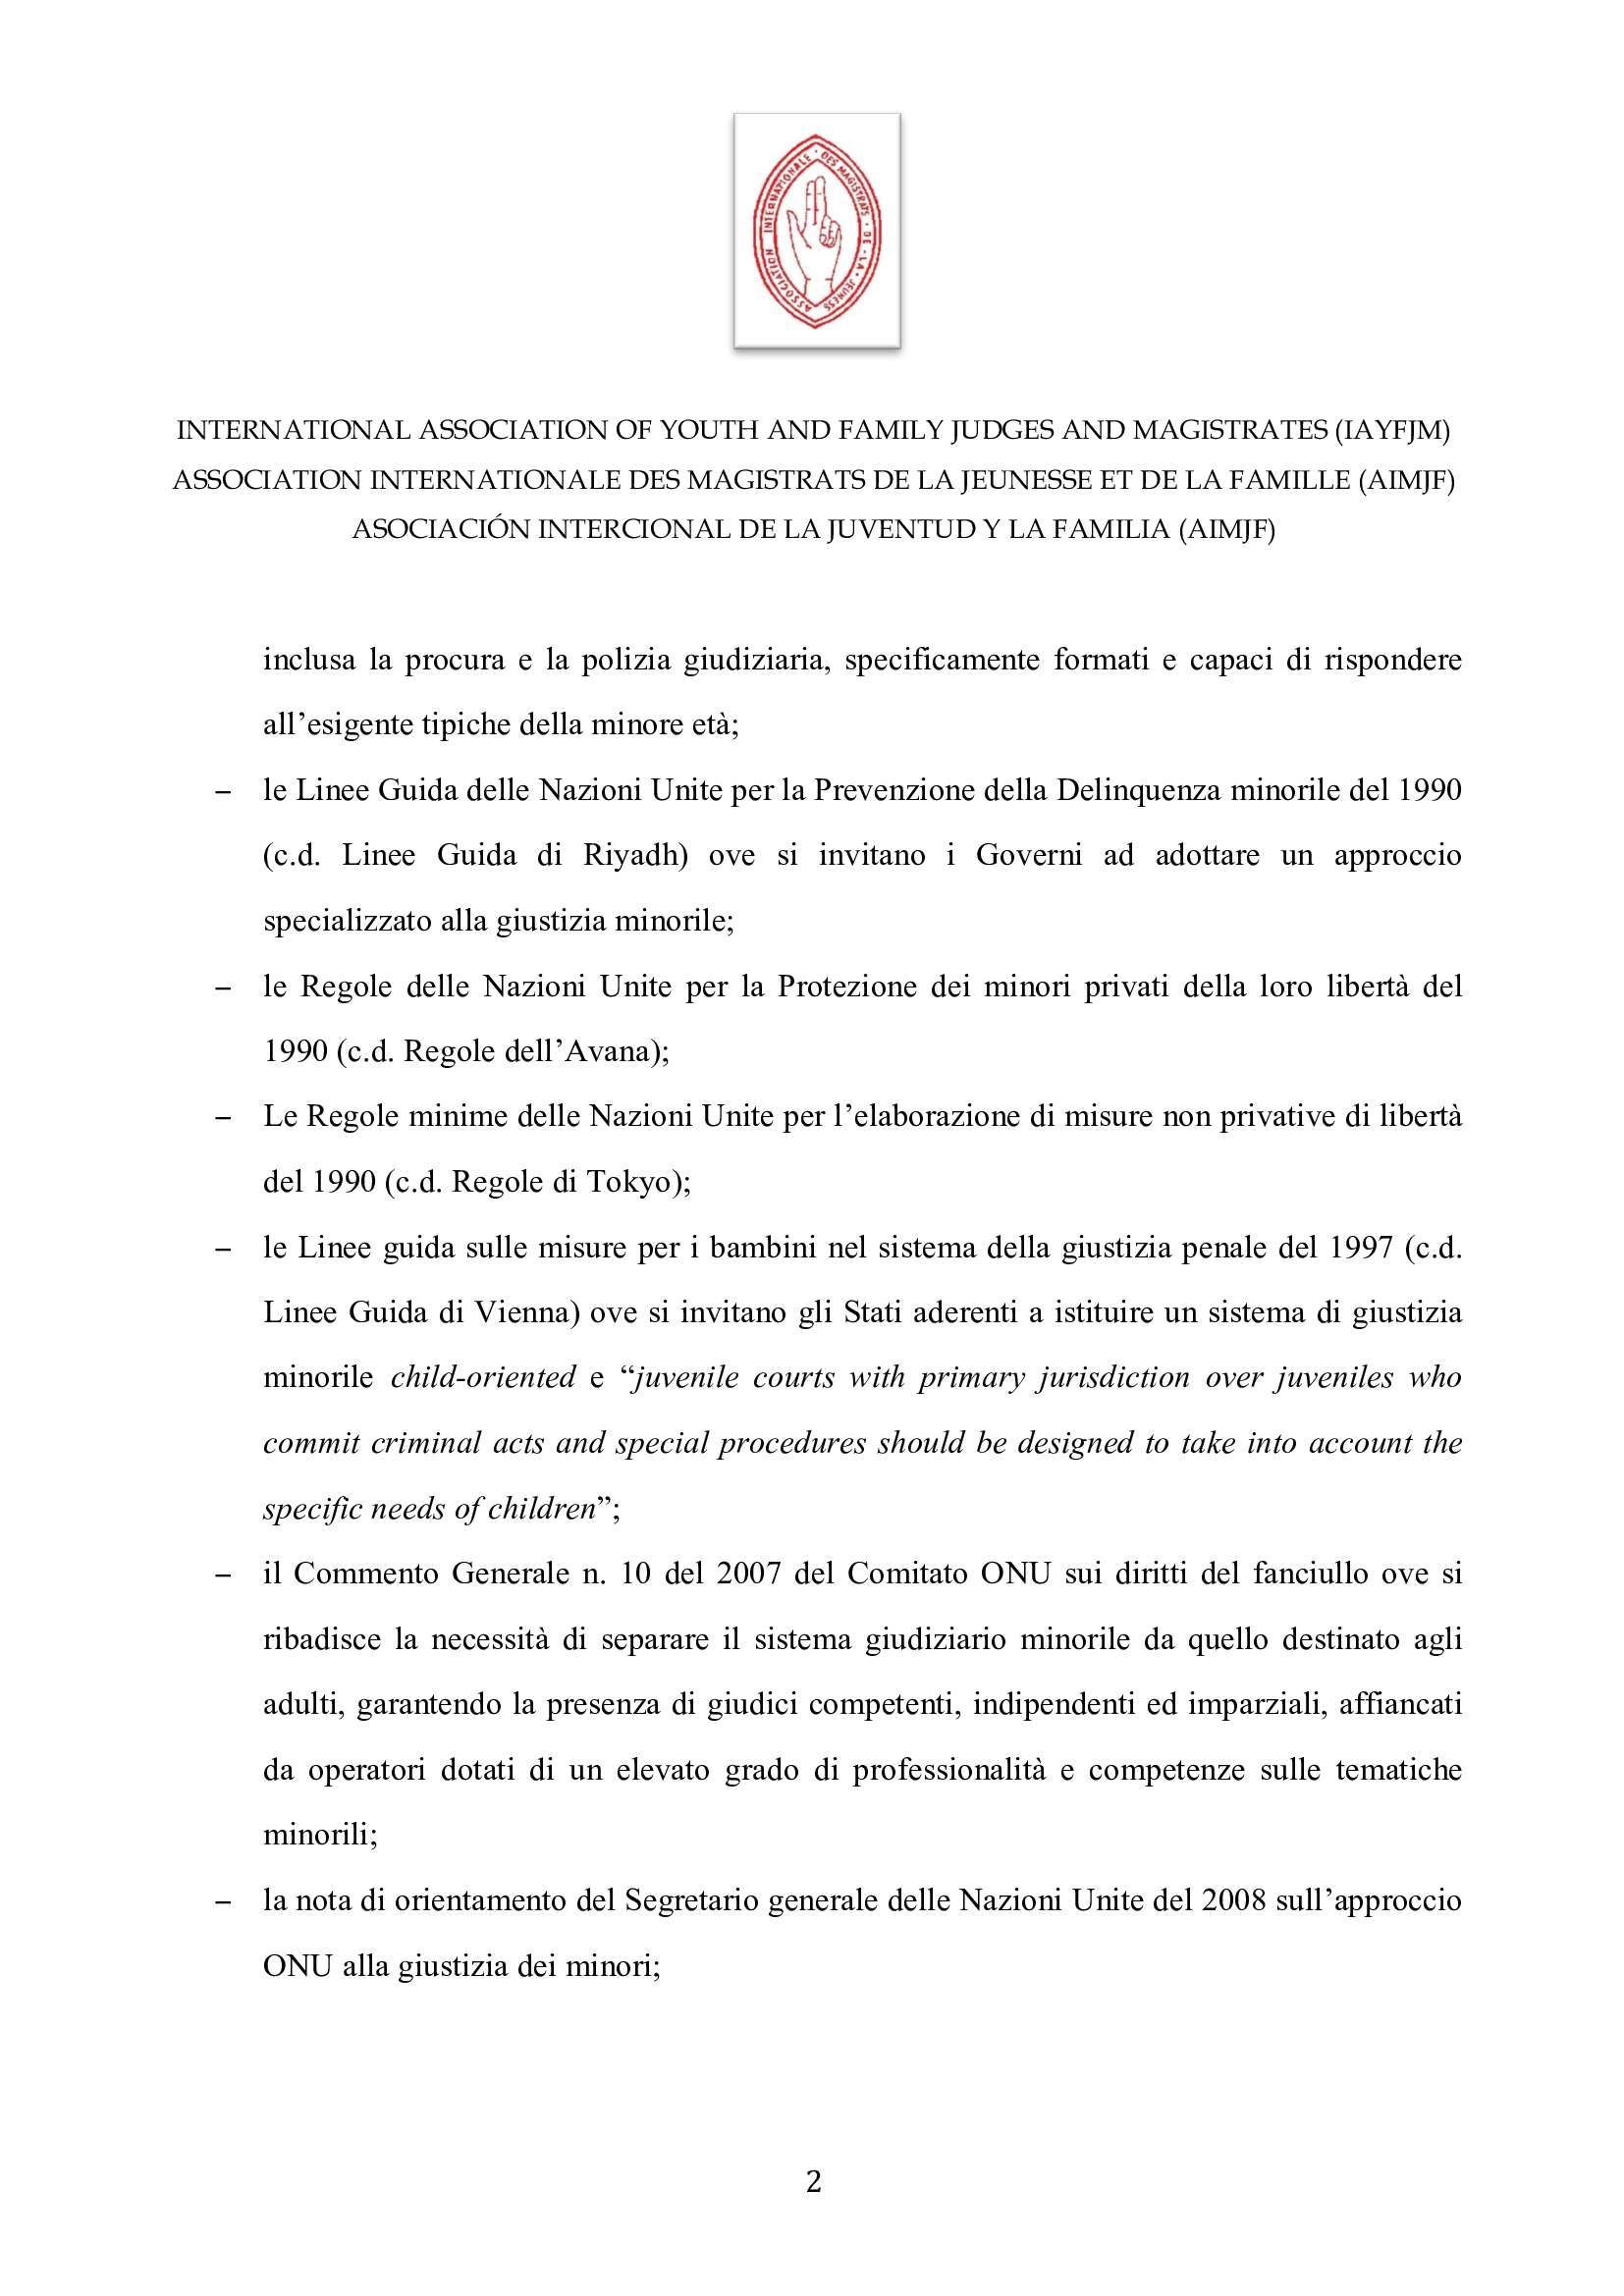 IAYFJM Statement on the Italian Juvenile Justice R 001